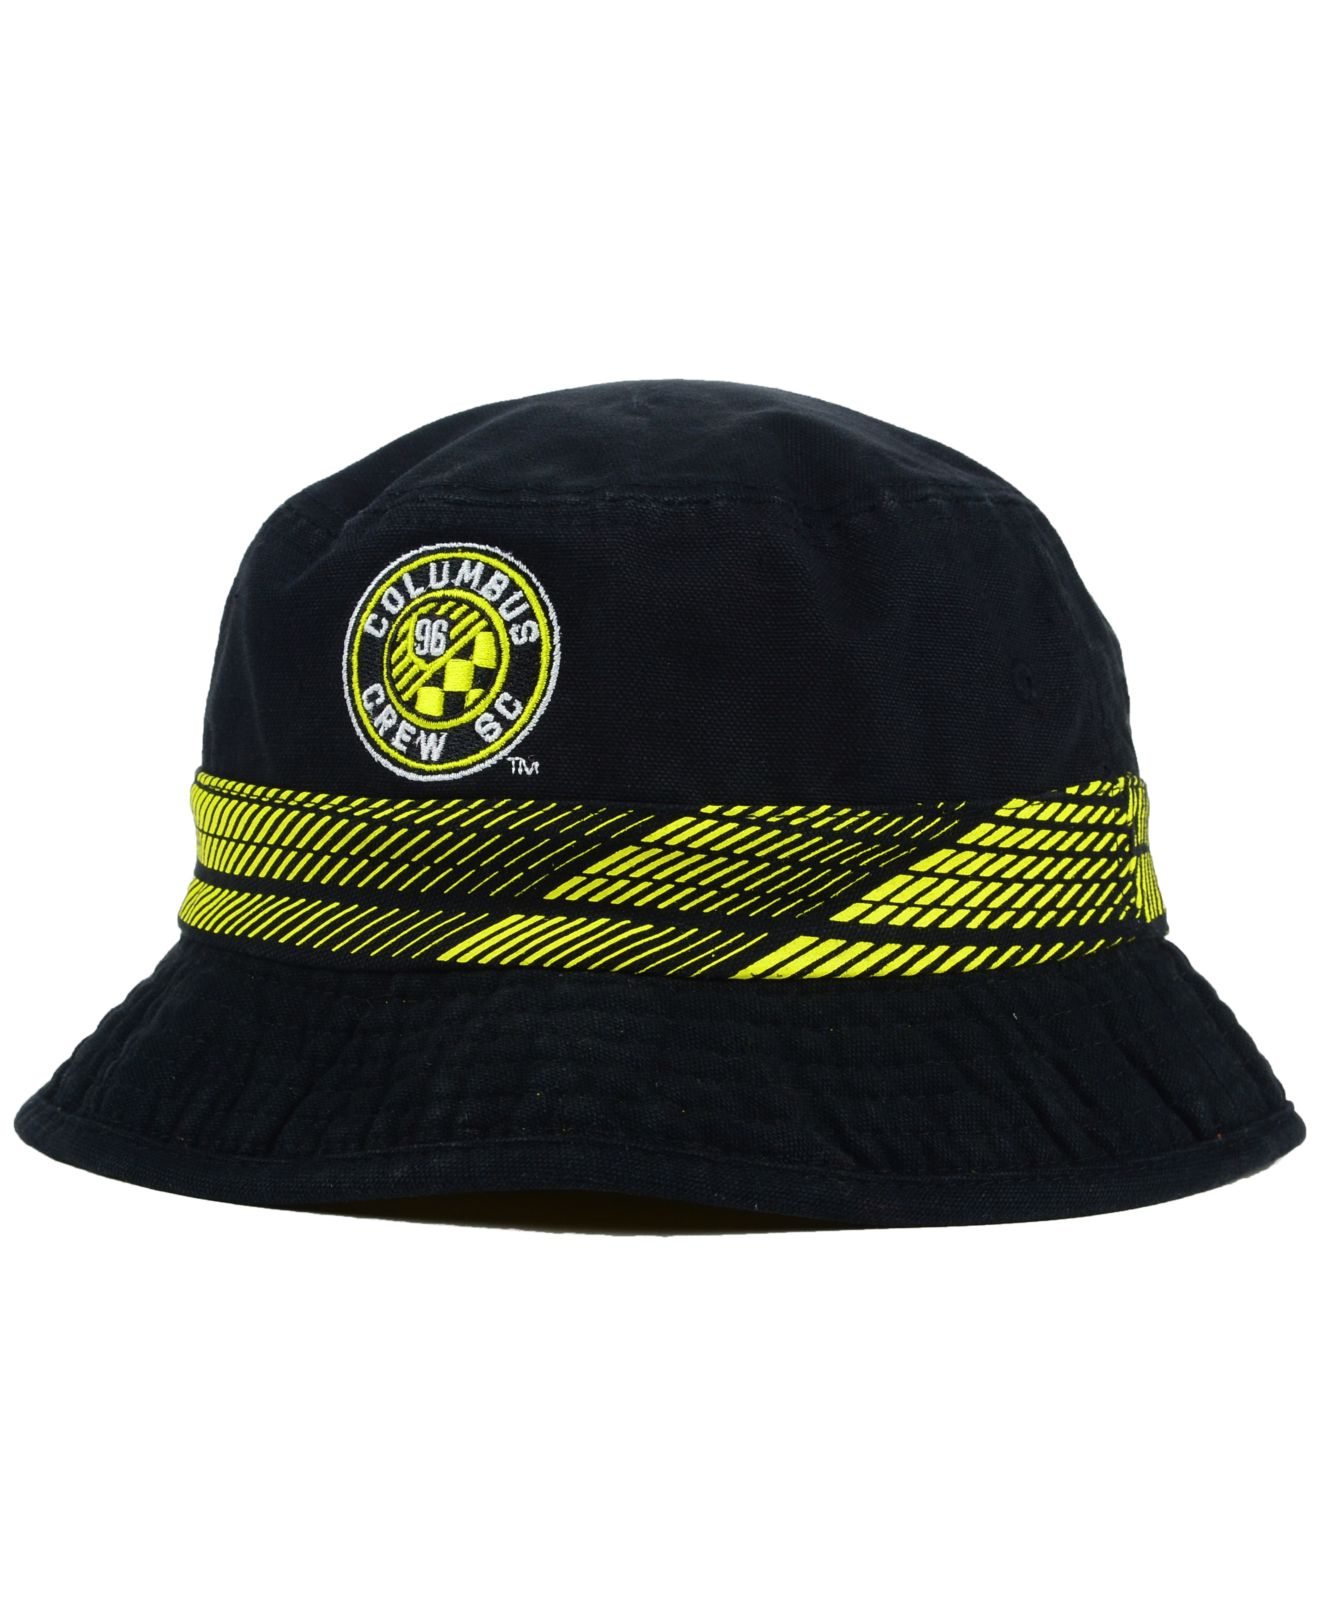 Lyst - Adidas Columbus Crew Evolution Bucket Hat in Yellow for Men